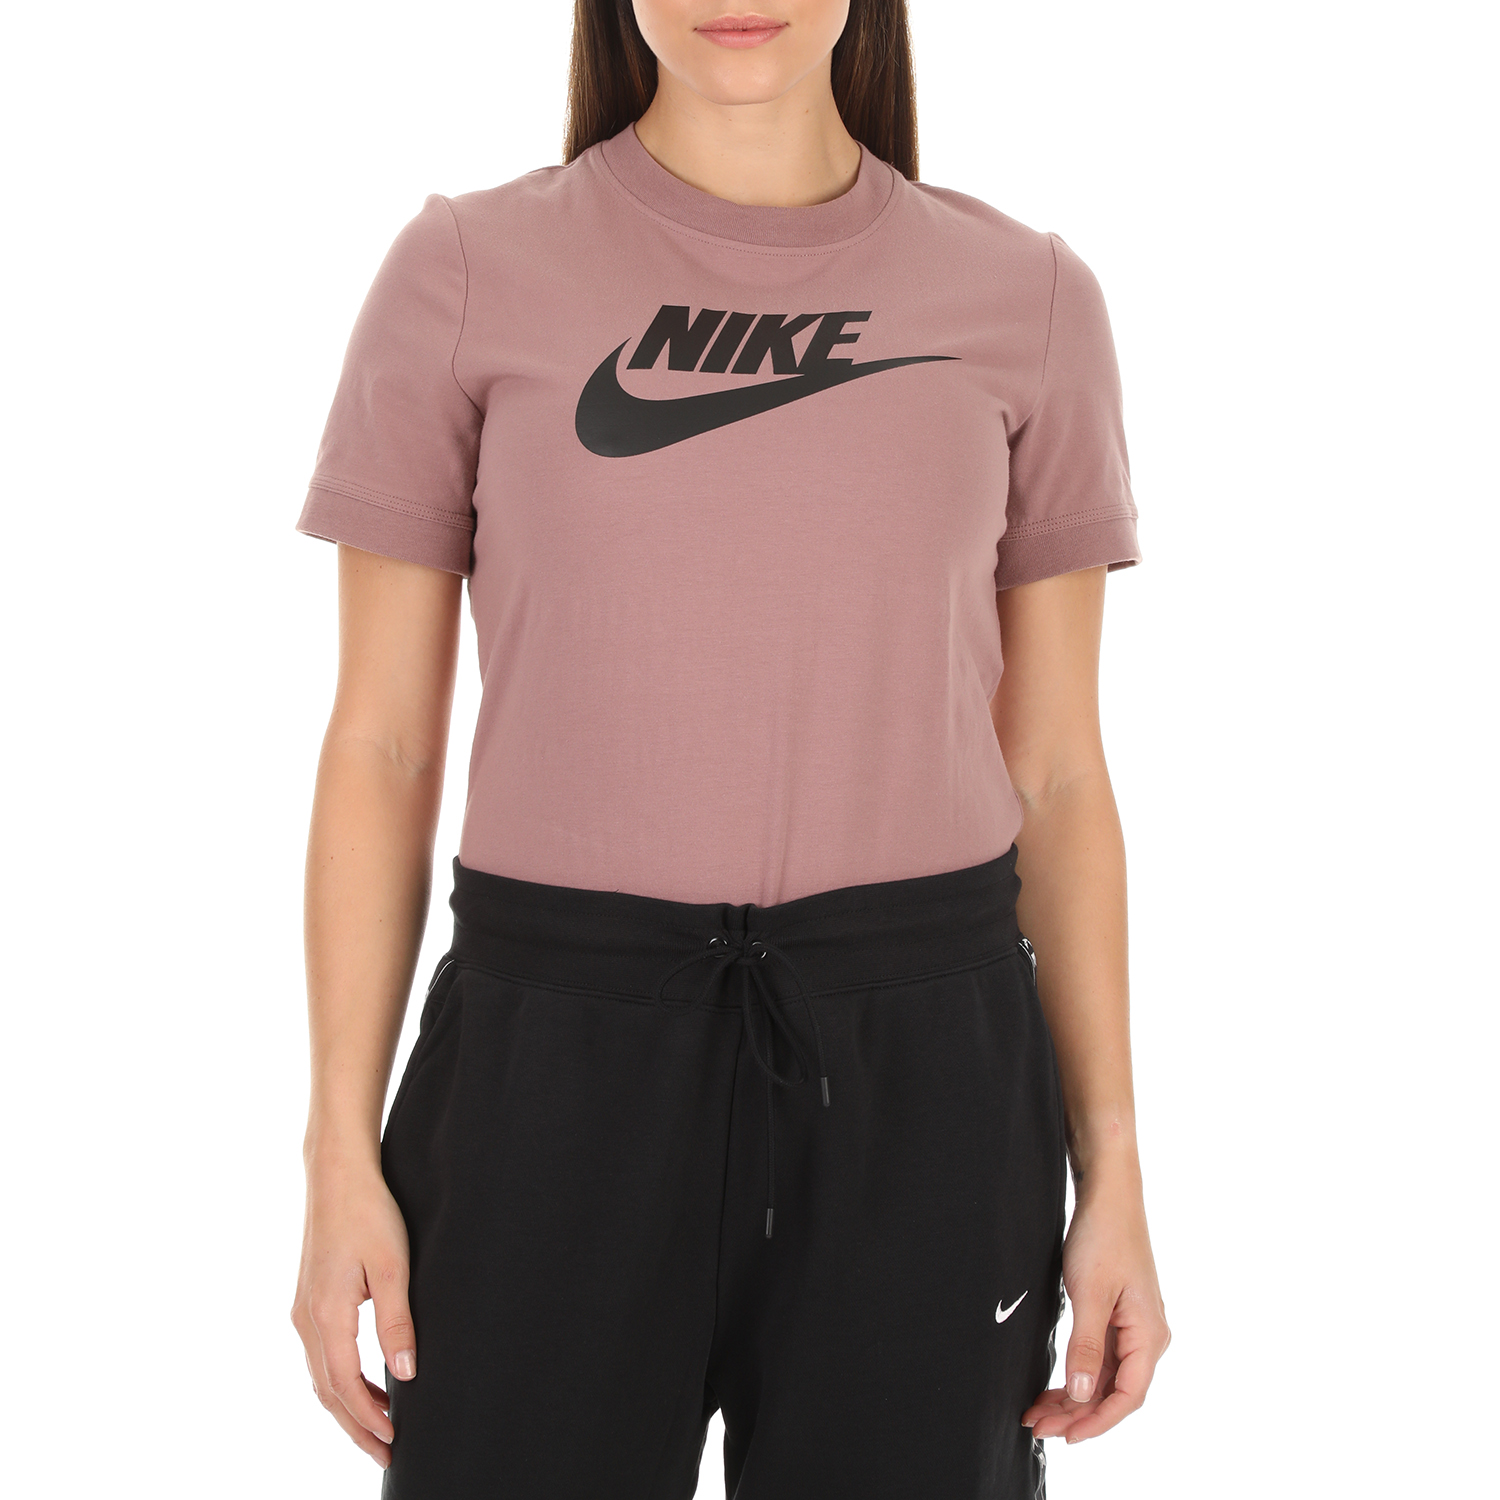 NIKE - Γυναικείο κοντομάνικο κορμάκι ESSNTL ροζ Γυναικεία/Ρούχα/Αθλητικά/T-shirt-Τοπ